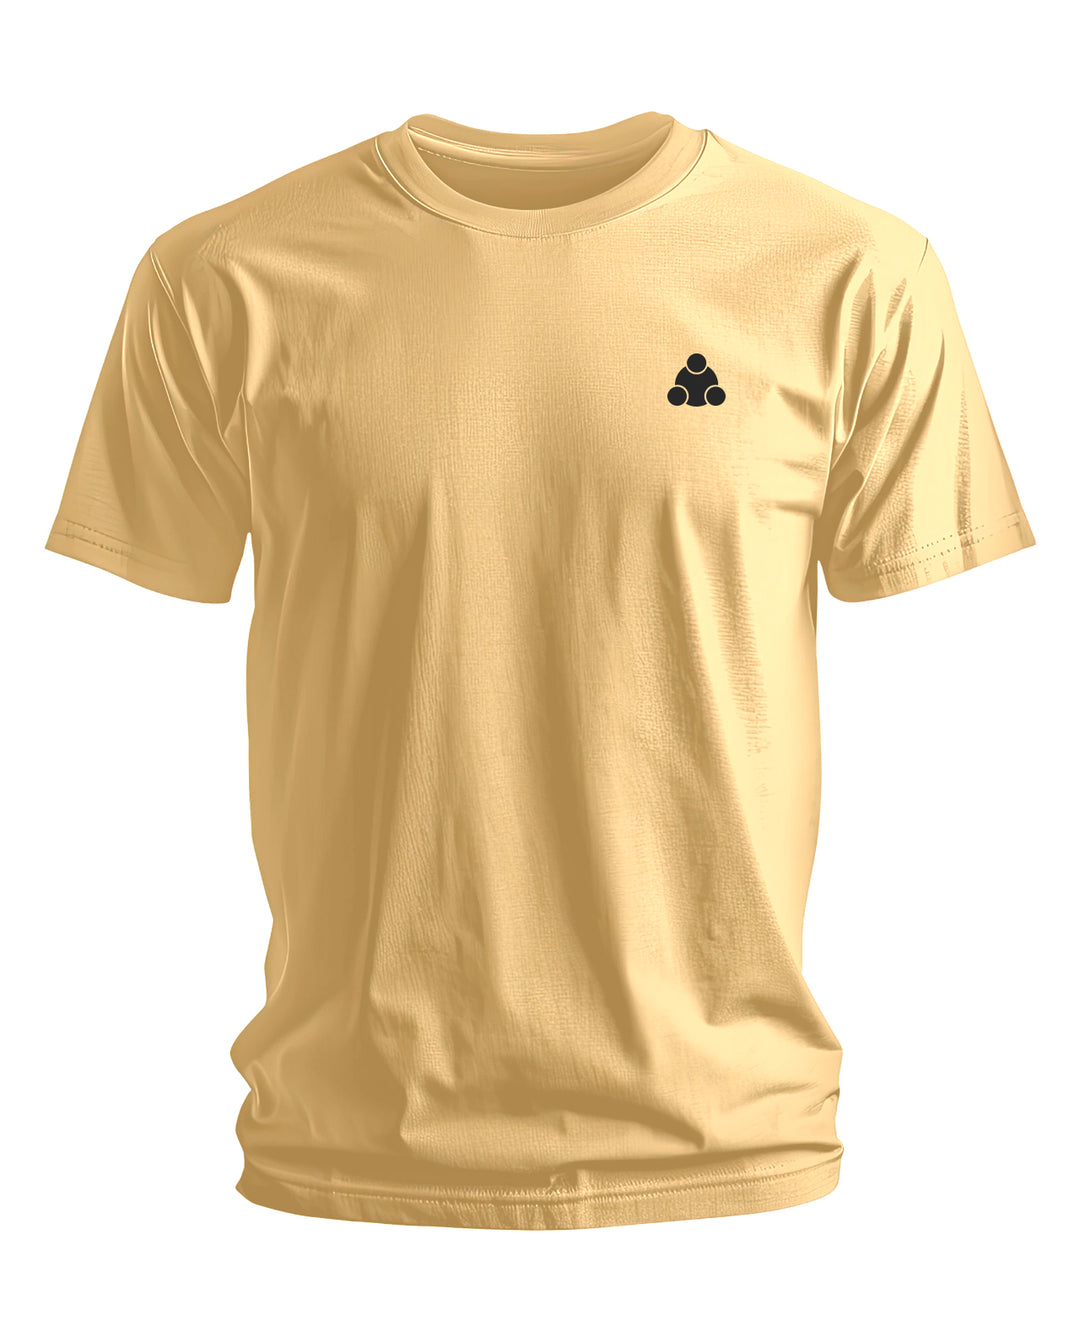 Trinizen Original Supima Cotton T-shirt